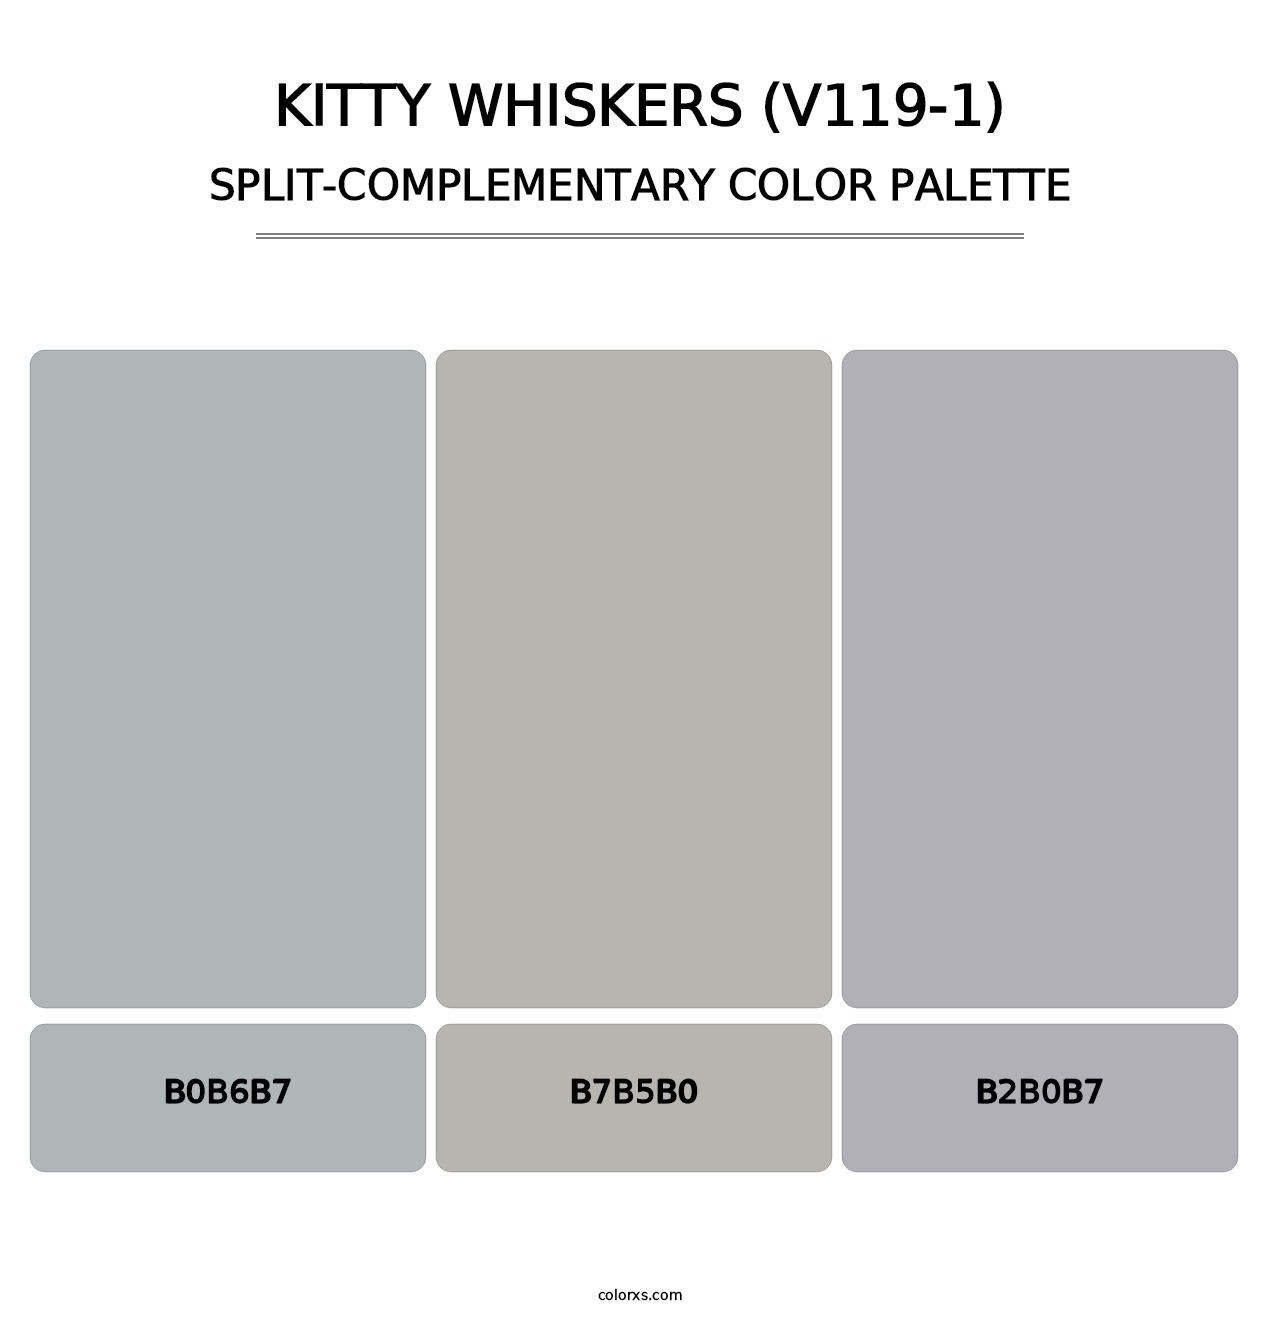 Kitty Whiskers (V119-1) - Split-Complementary Color Palette